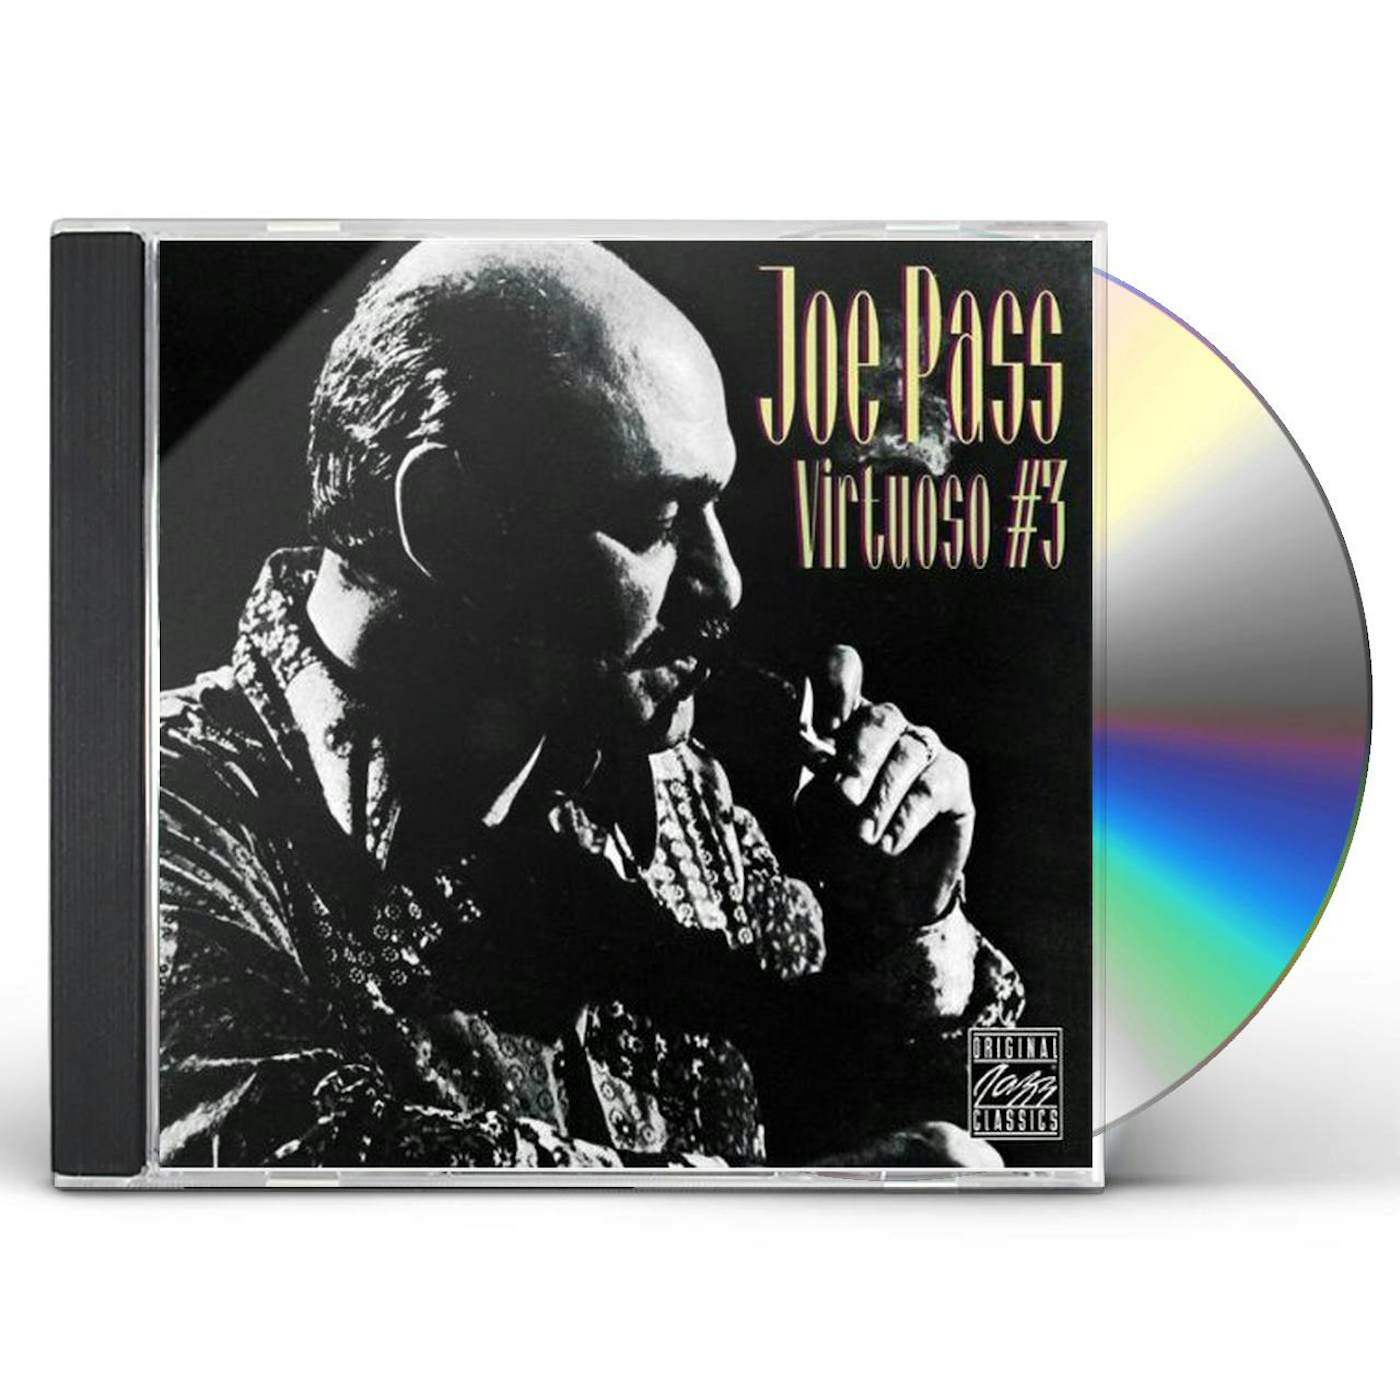 Joe Pass VIRTUOSO 3 CD